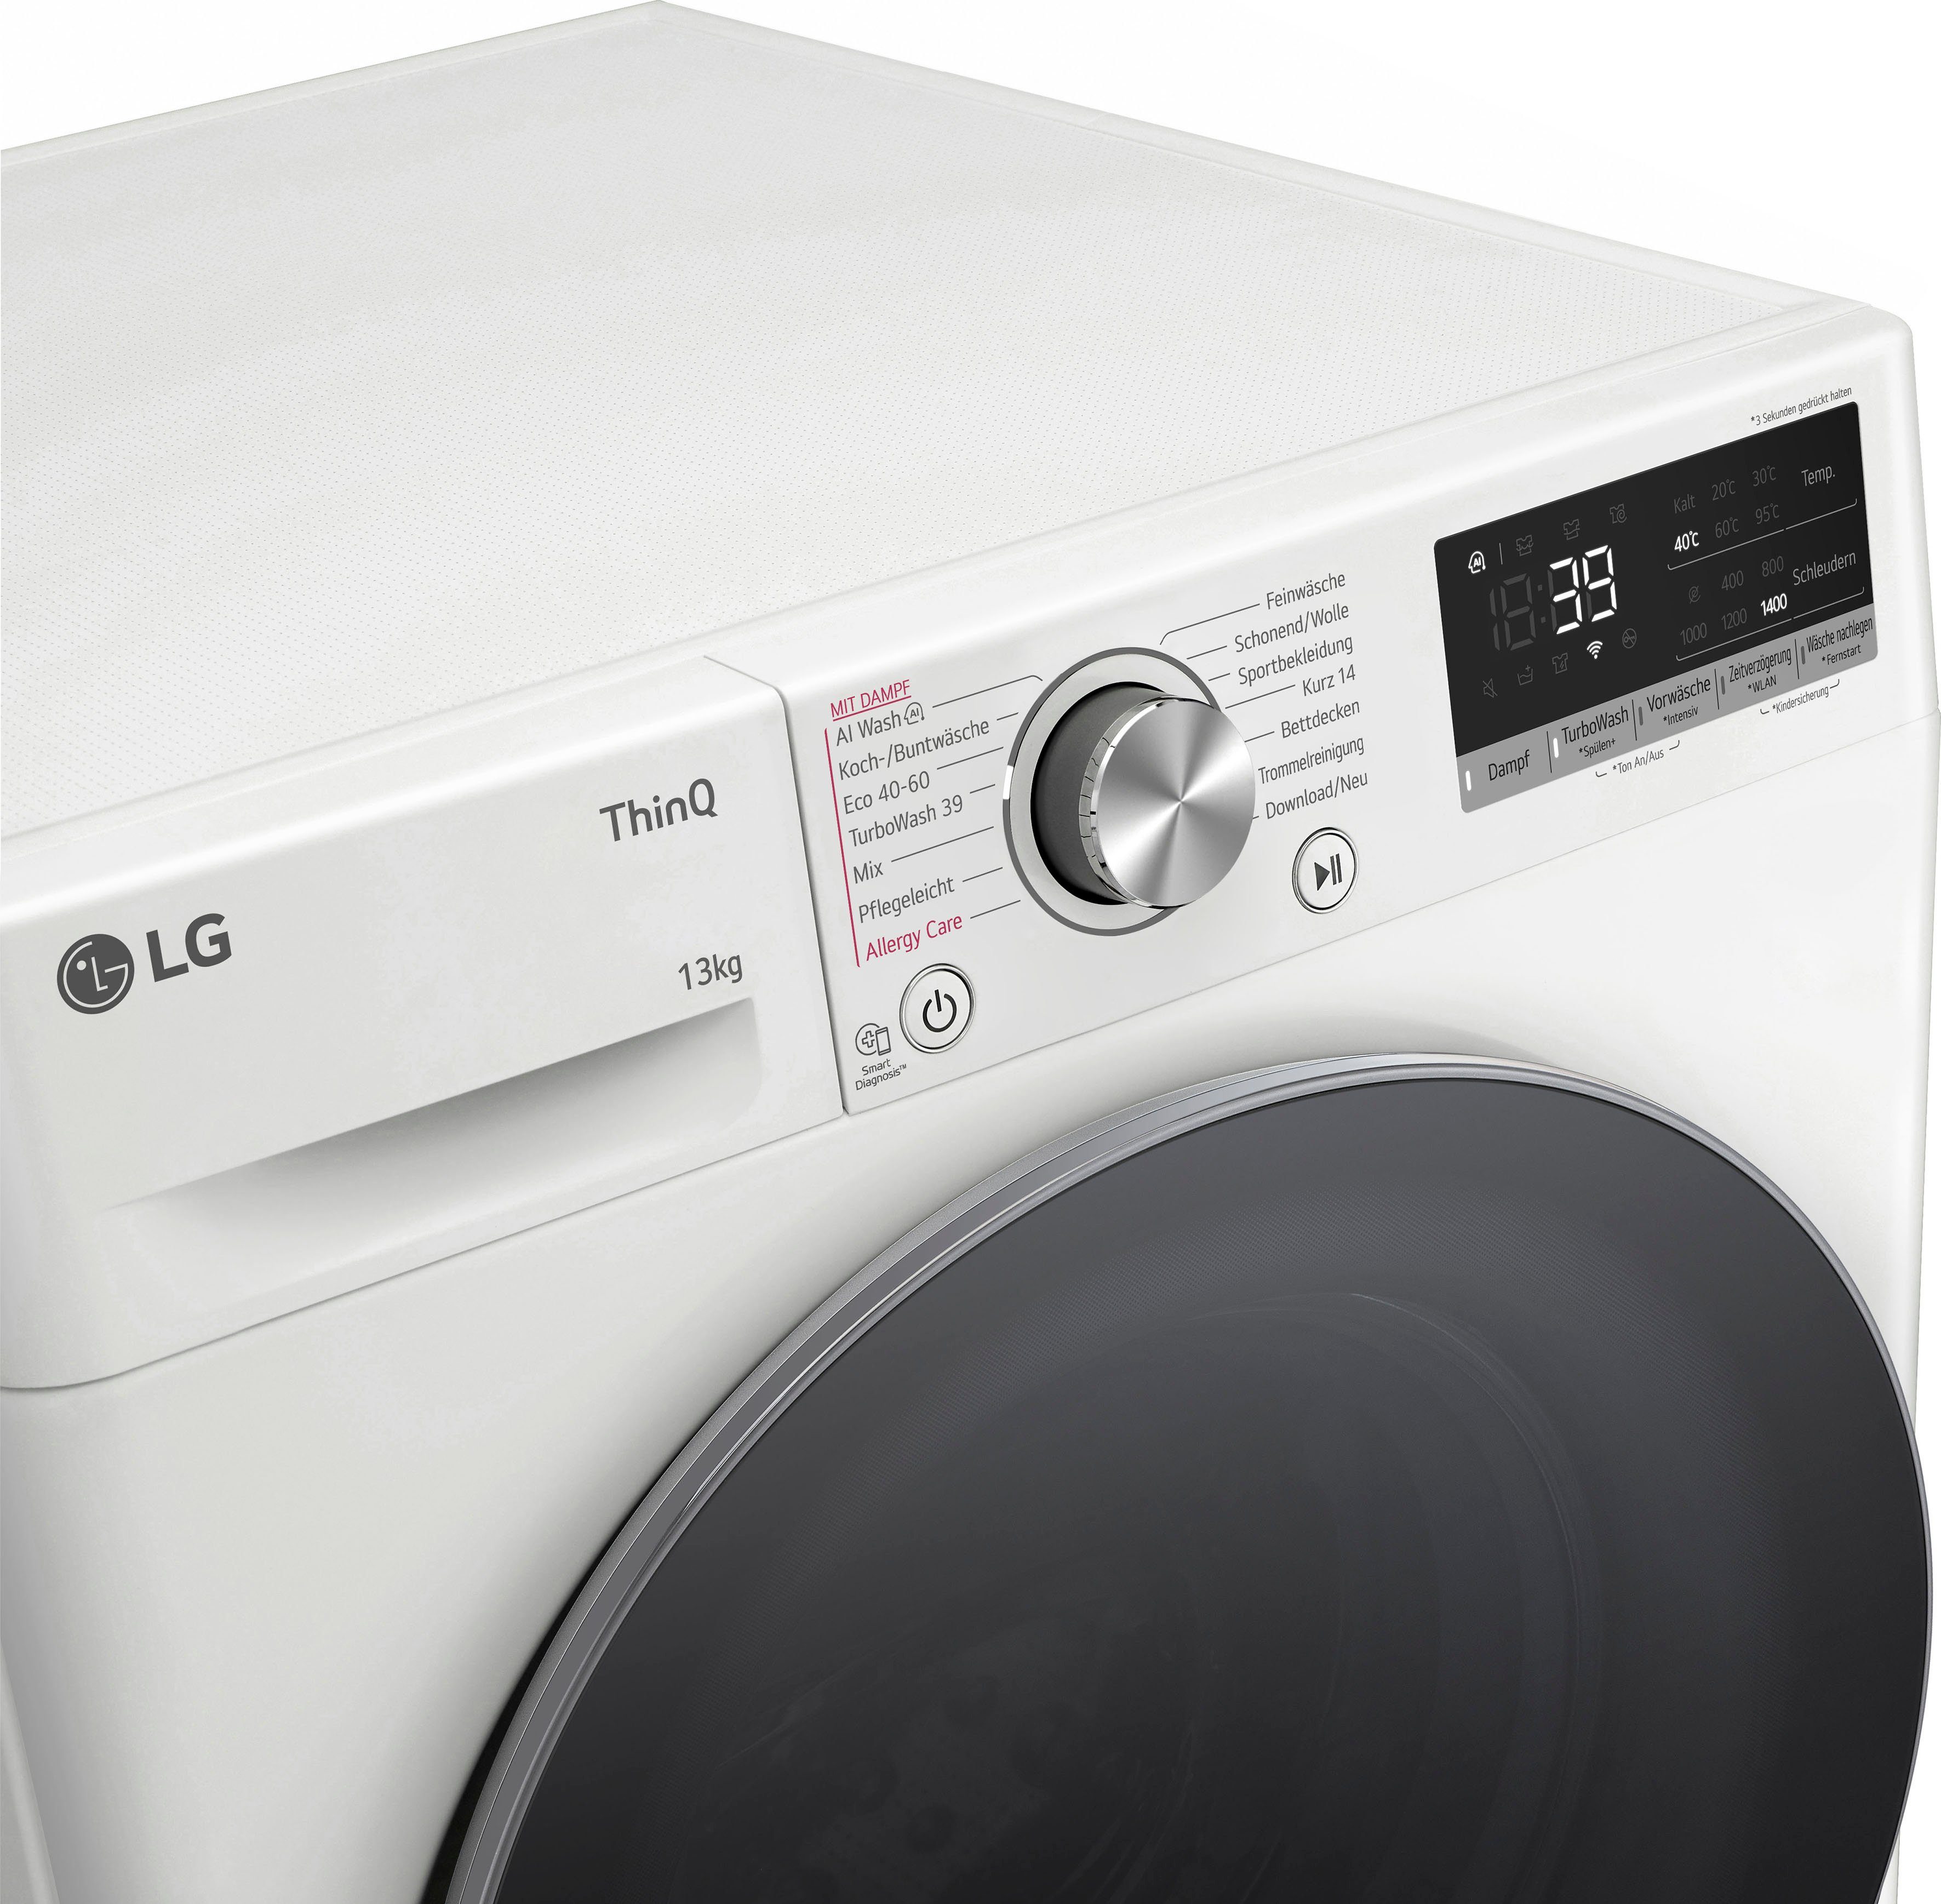 LG Waschmaschine Serie 7 F4WR7031, 13 kg, U/min 1400